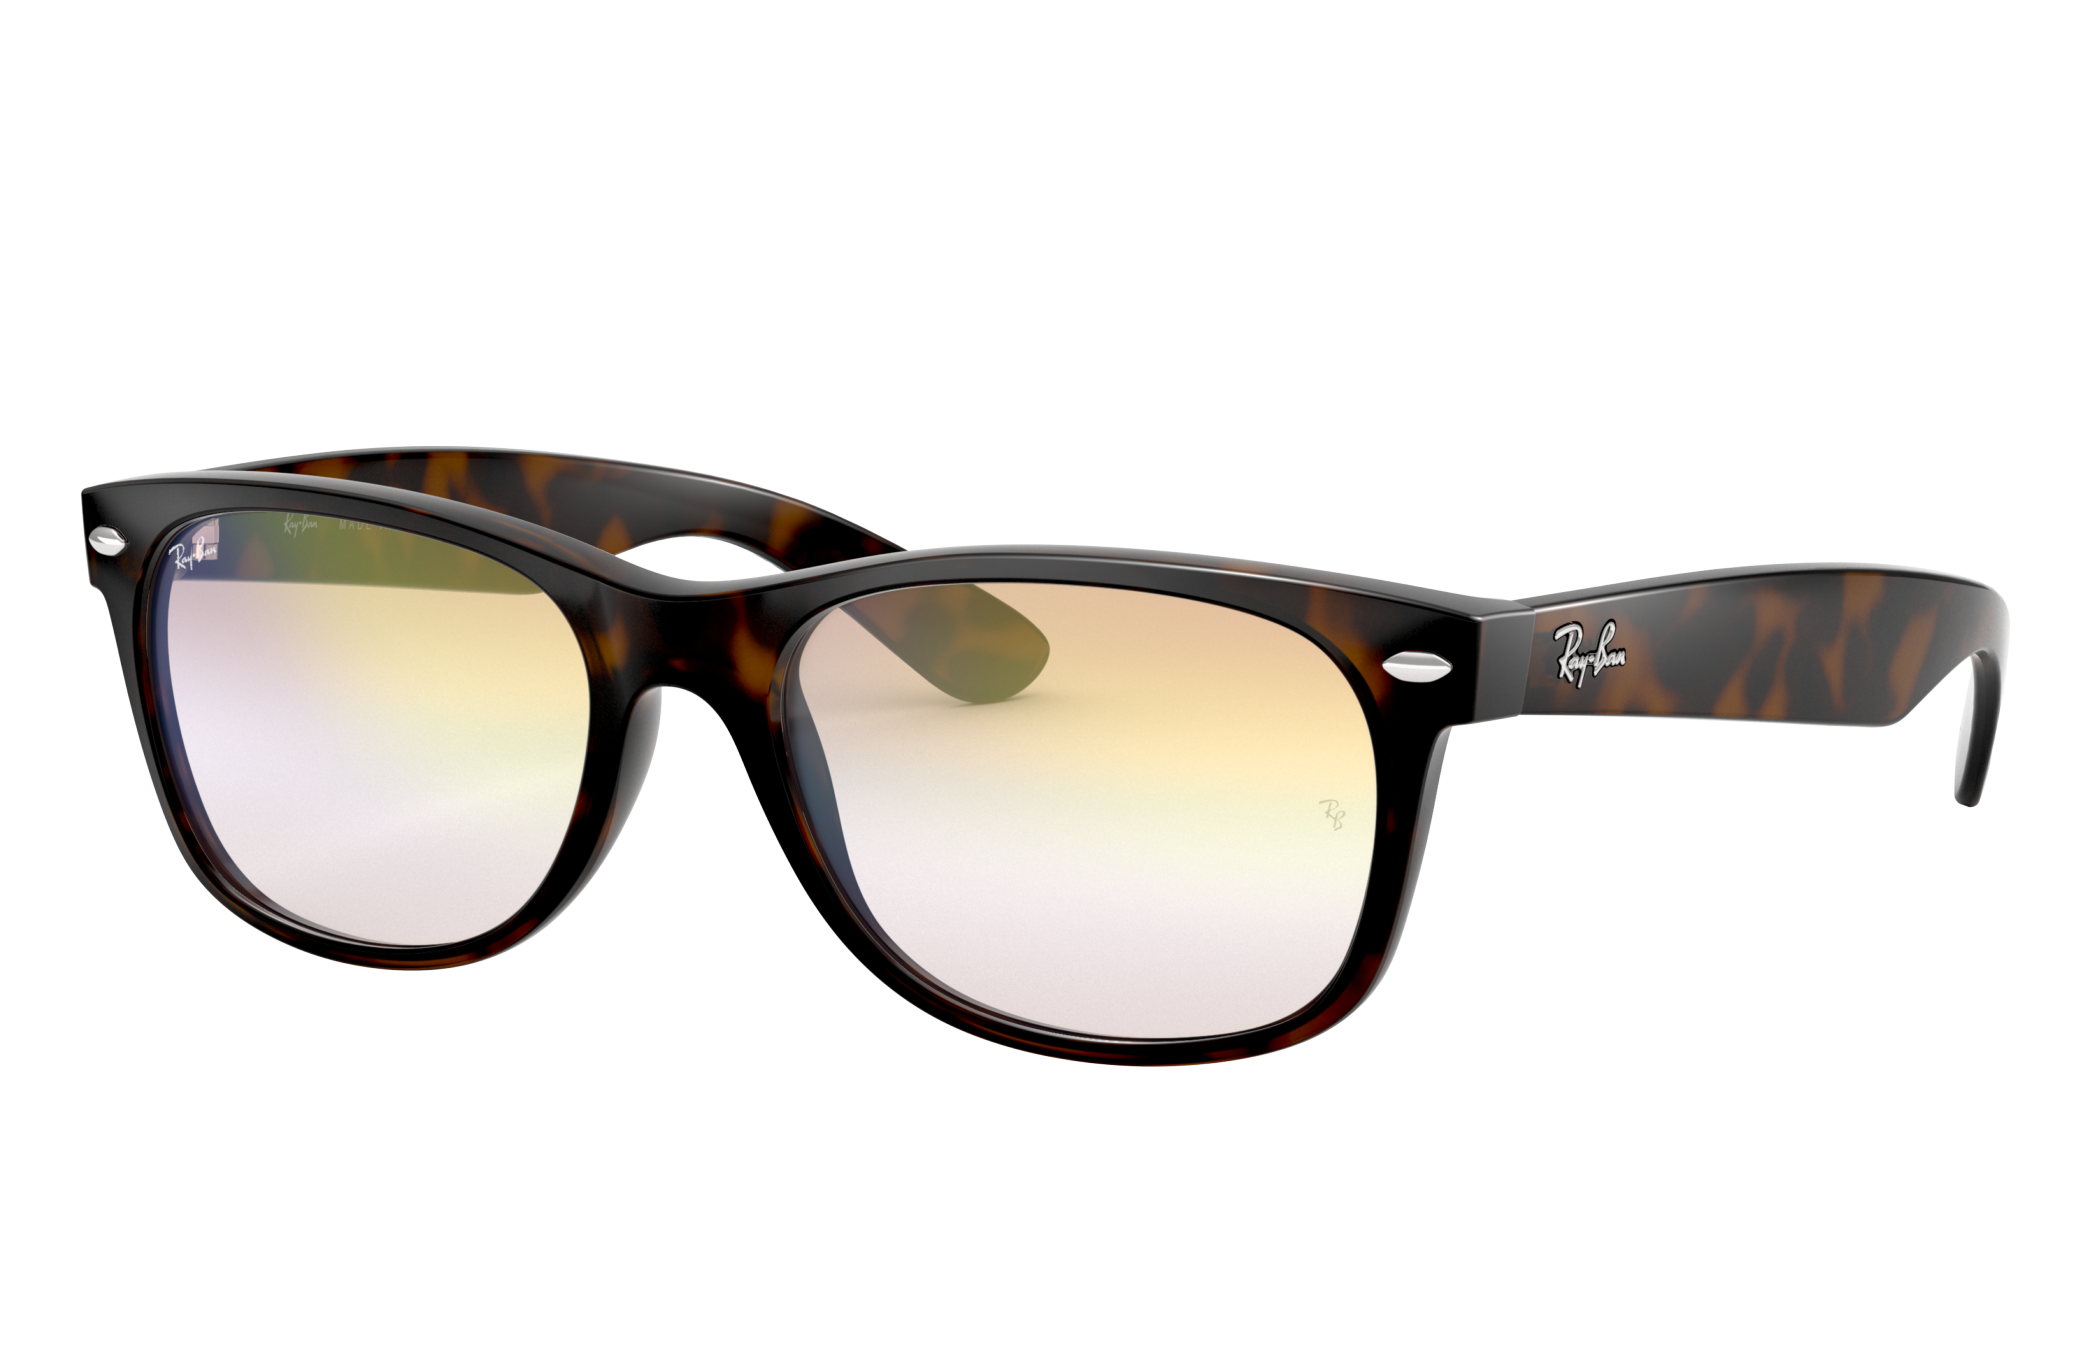 New Wayfarer Flash Gradient Lenses Sunglasses in Tortoise and Gold | Ray-Ban ®